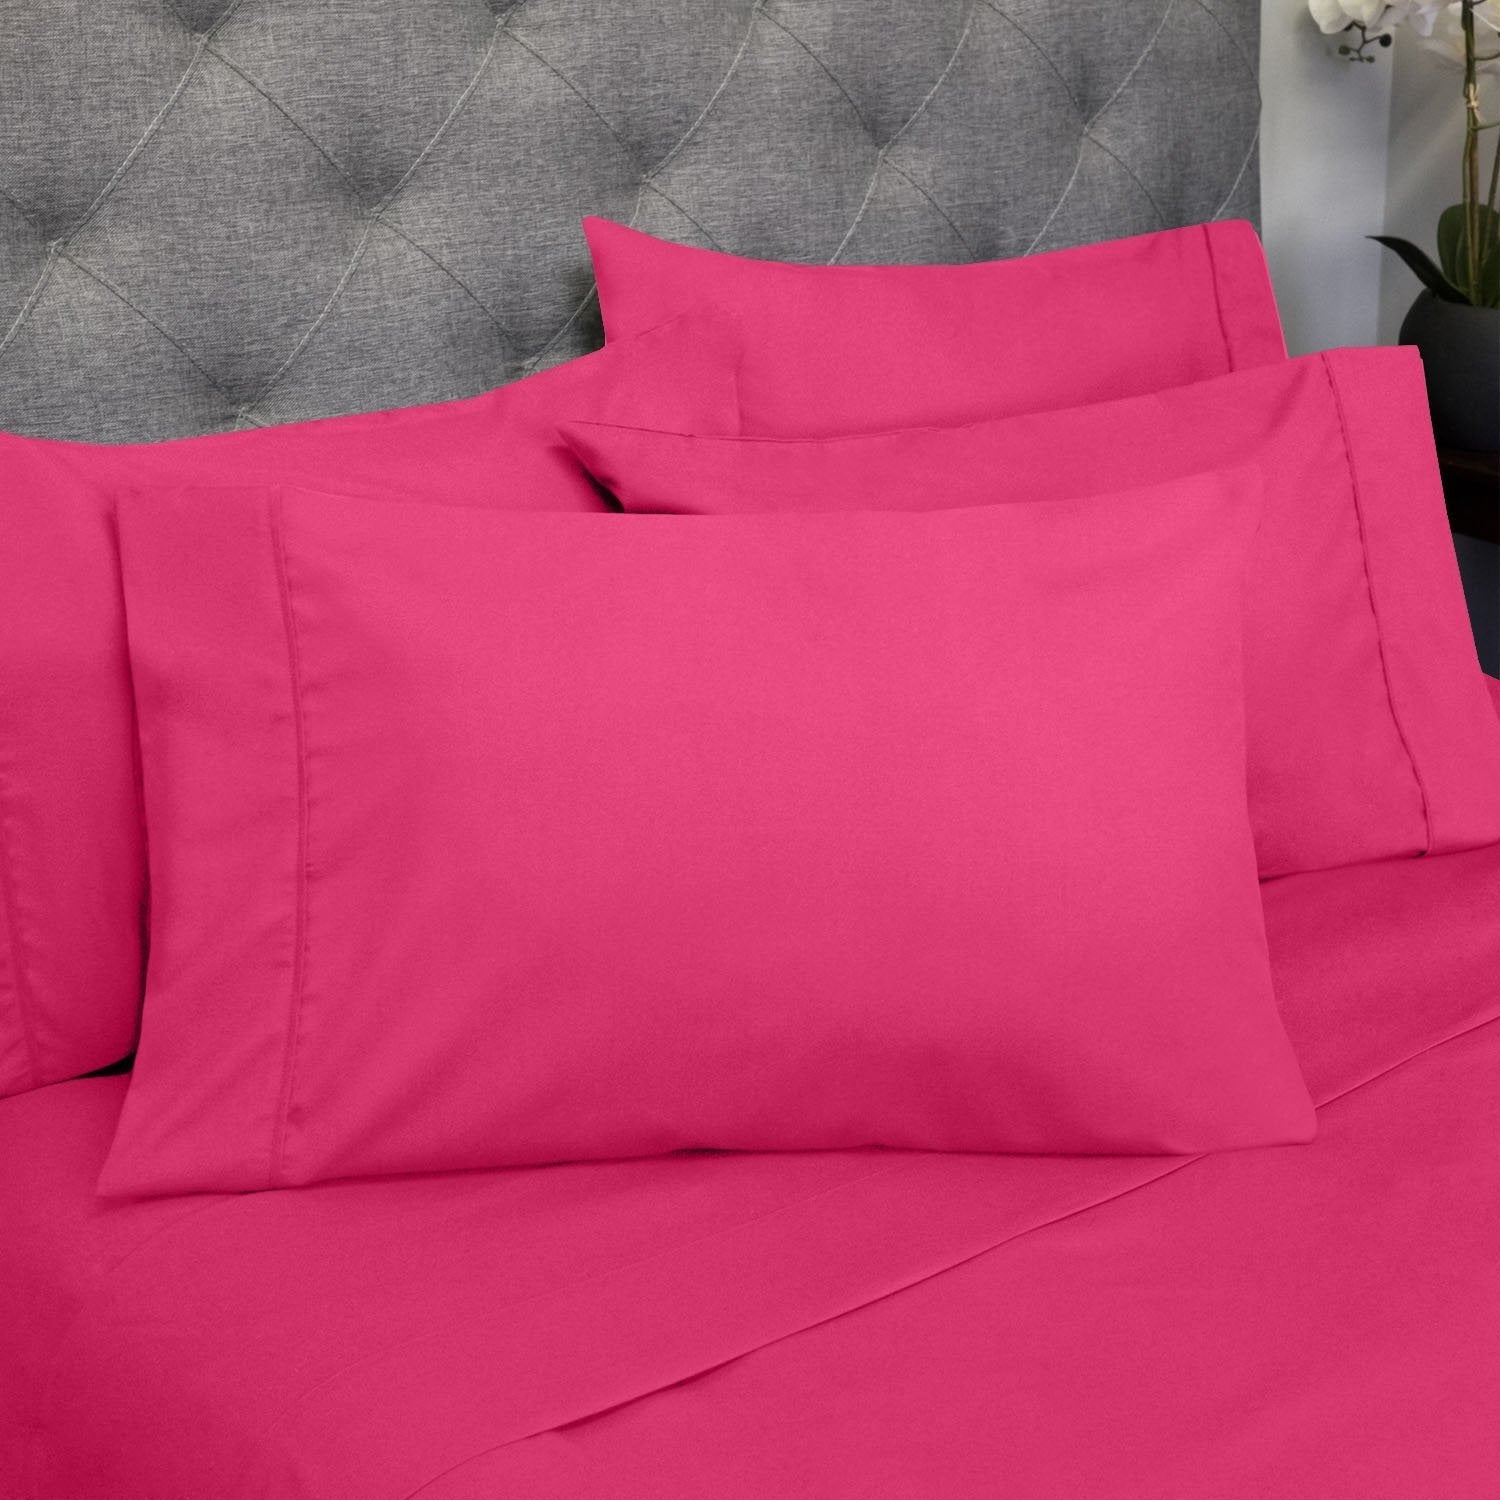 Deluxe 6-Piece Bed Sheet Set (Fuchsia) - Pillowcases